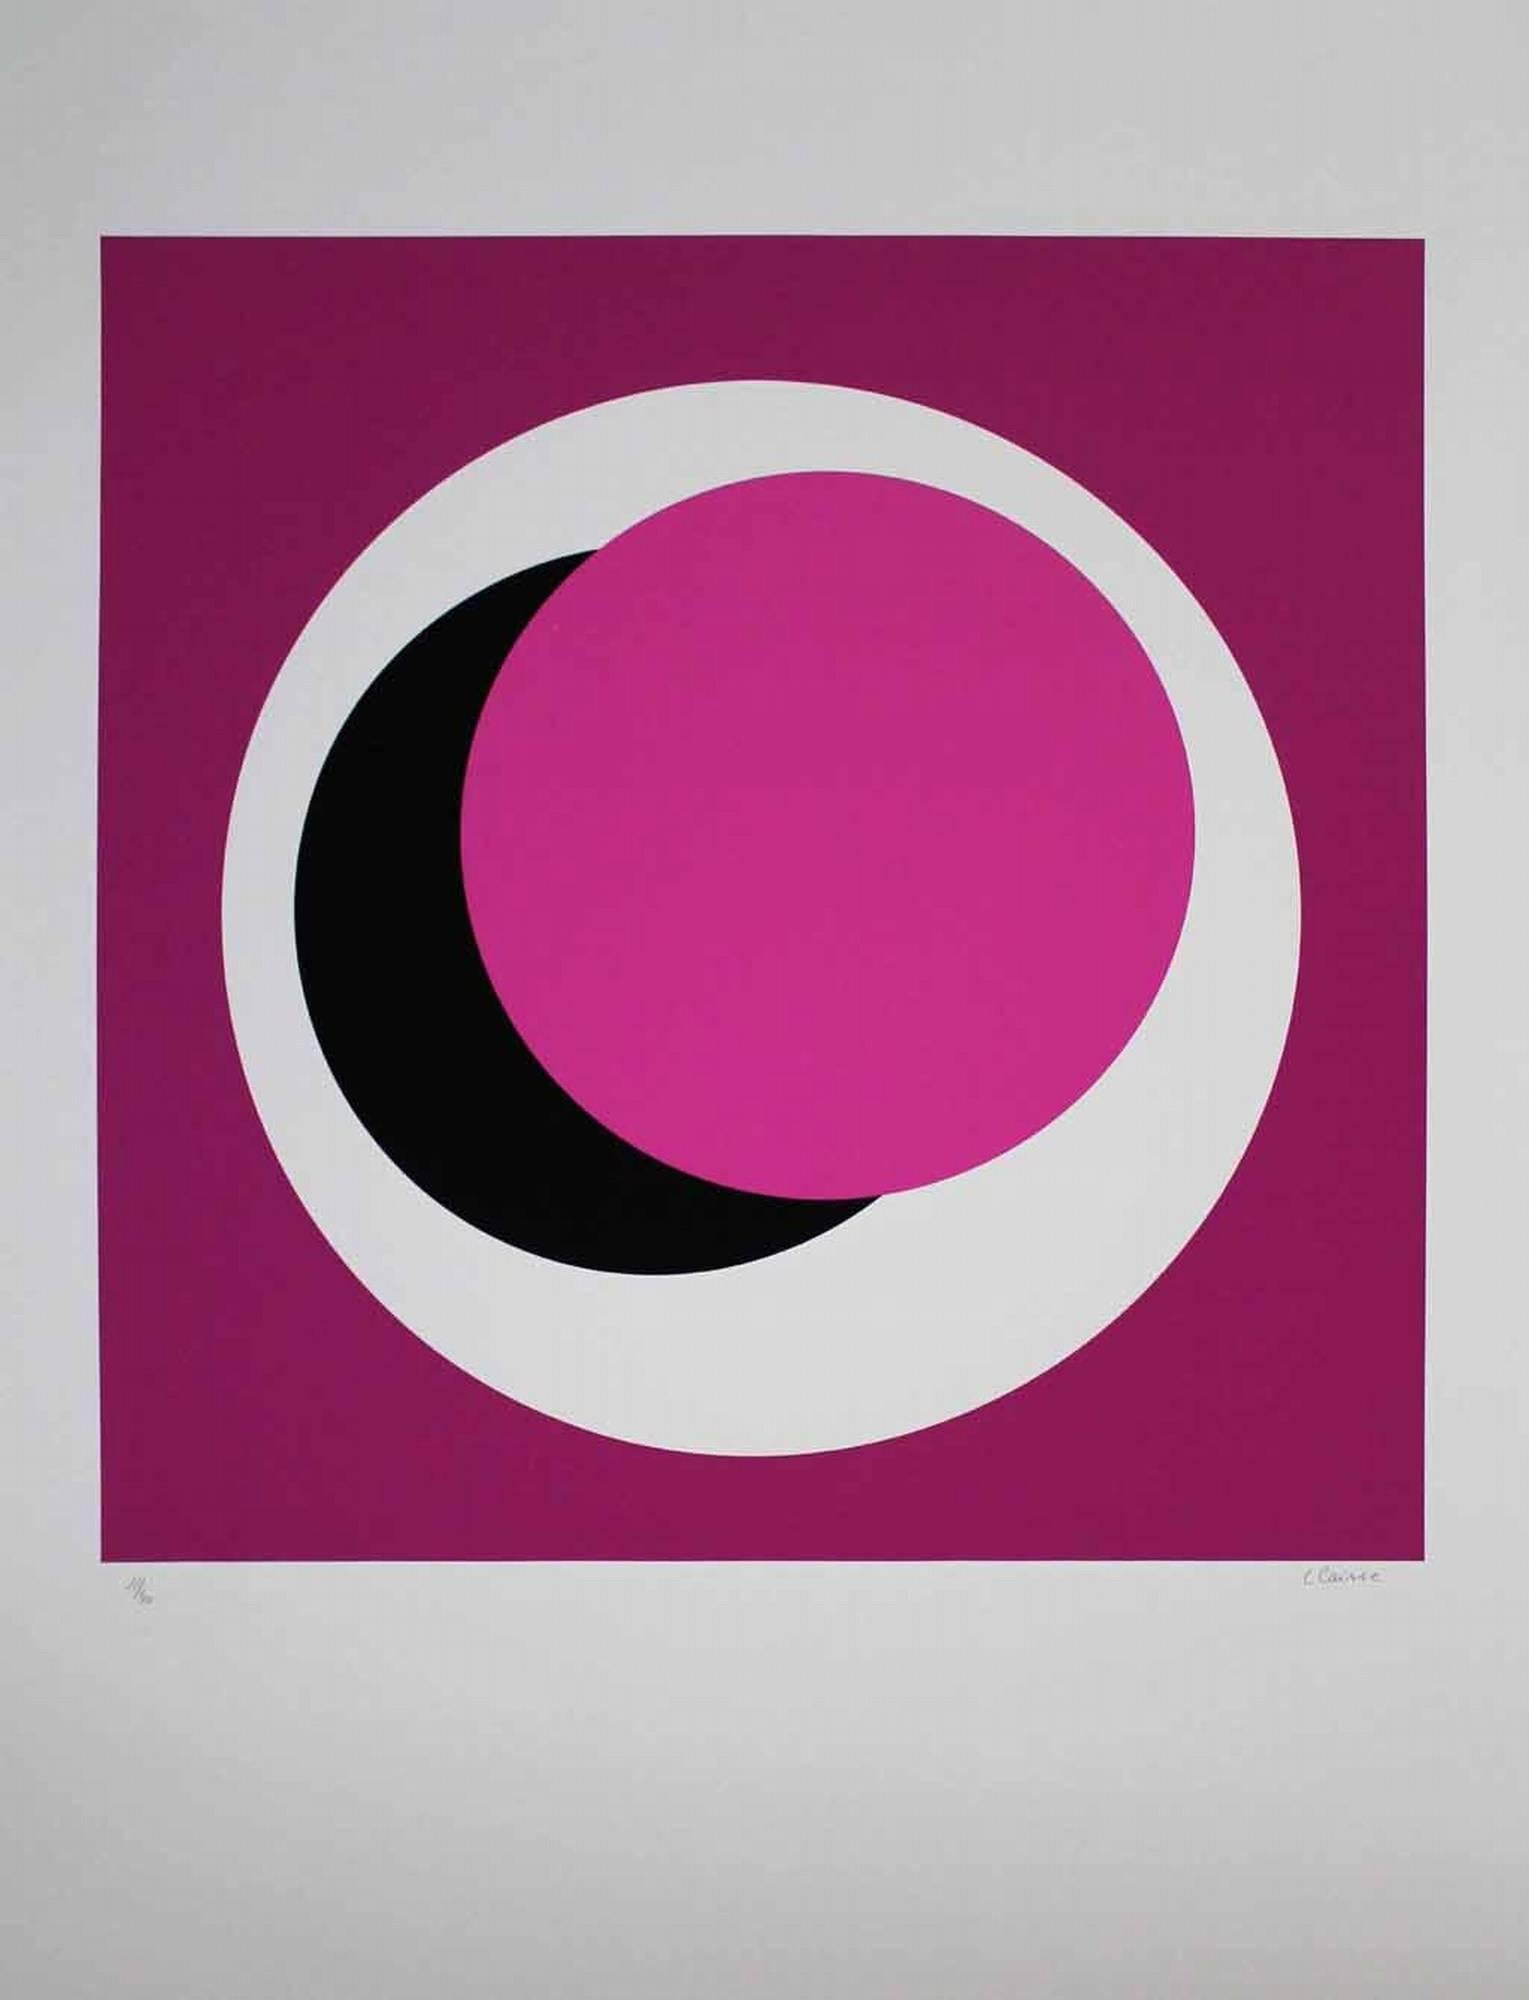 Pale Pink Circle (Cercle rose pale)